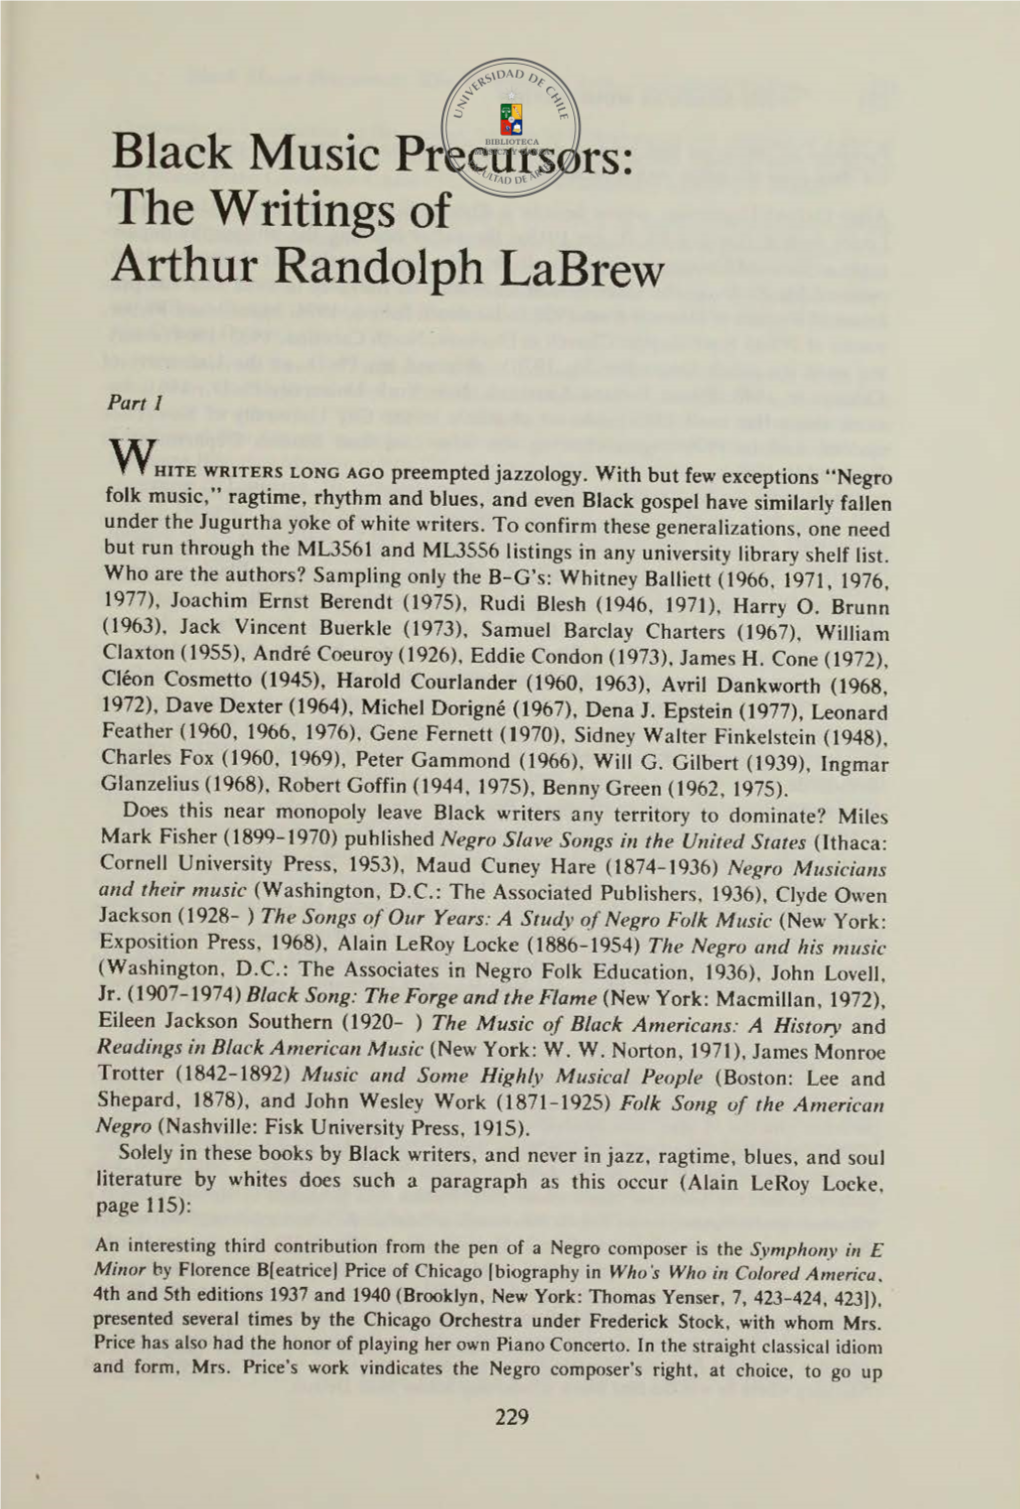 Black Music Precursors: the W Ritings of Arthur Randolph Labrew